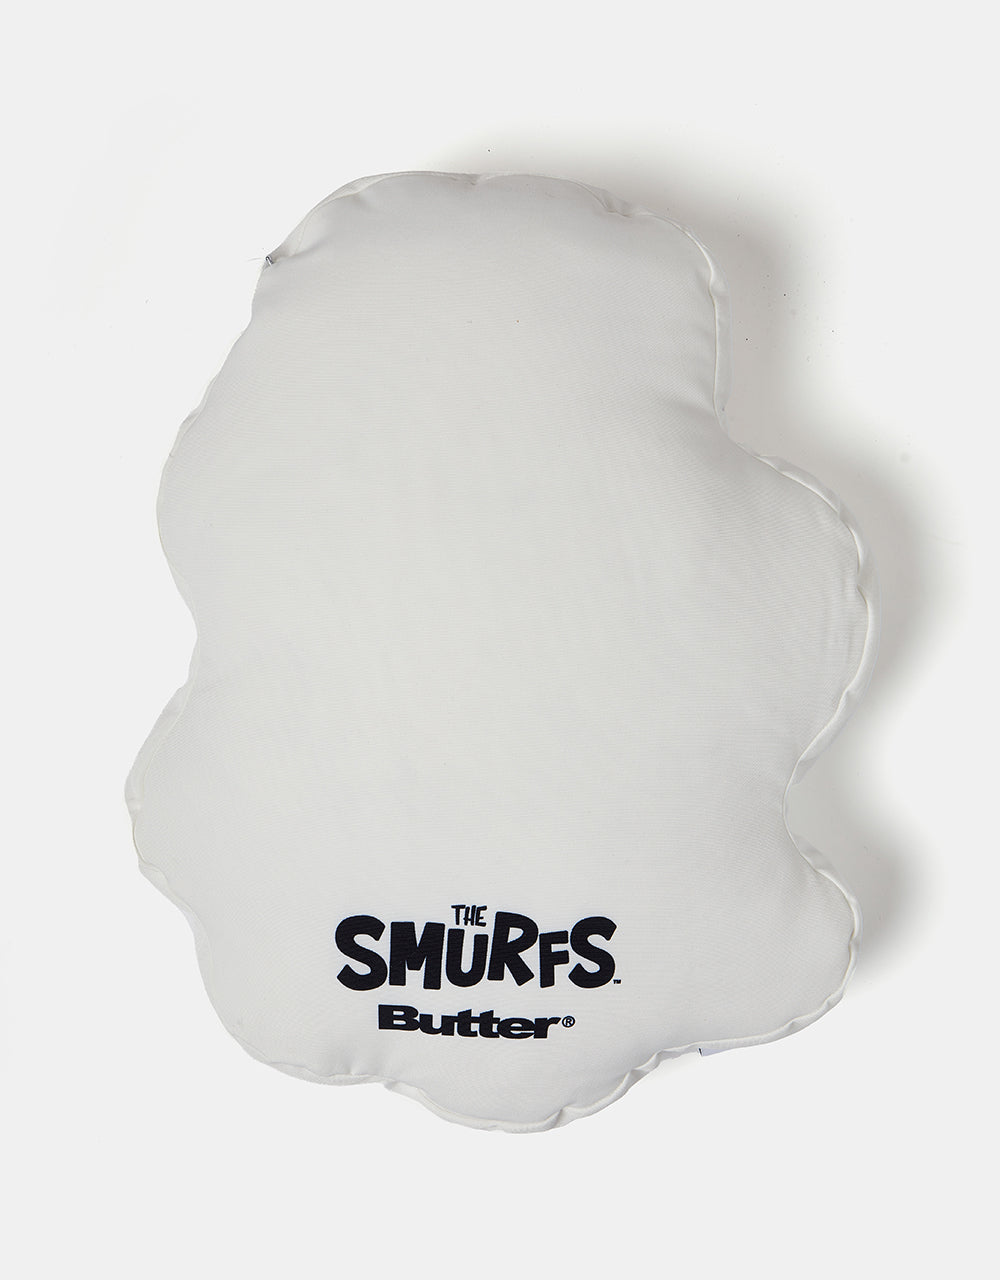 Butter Goods x The Smurfs Harmony Pillow - Multi